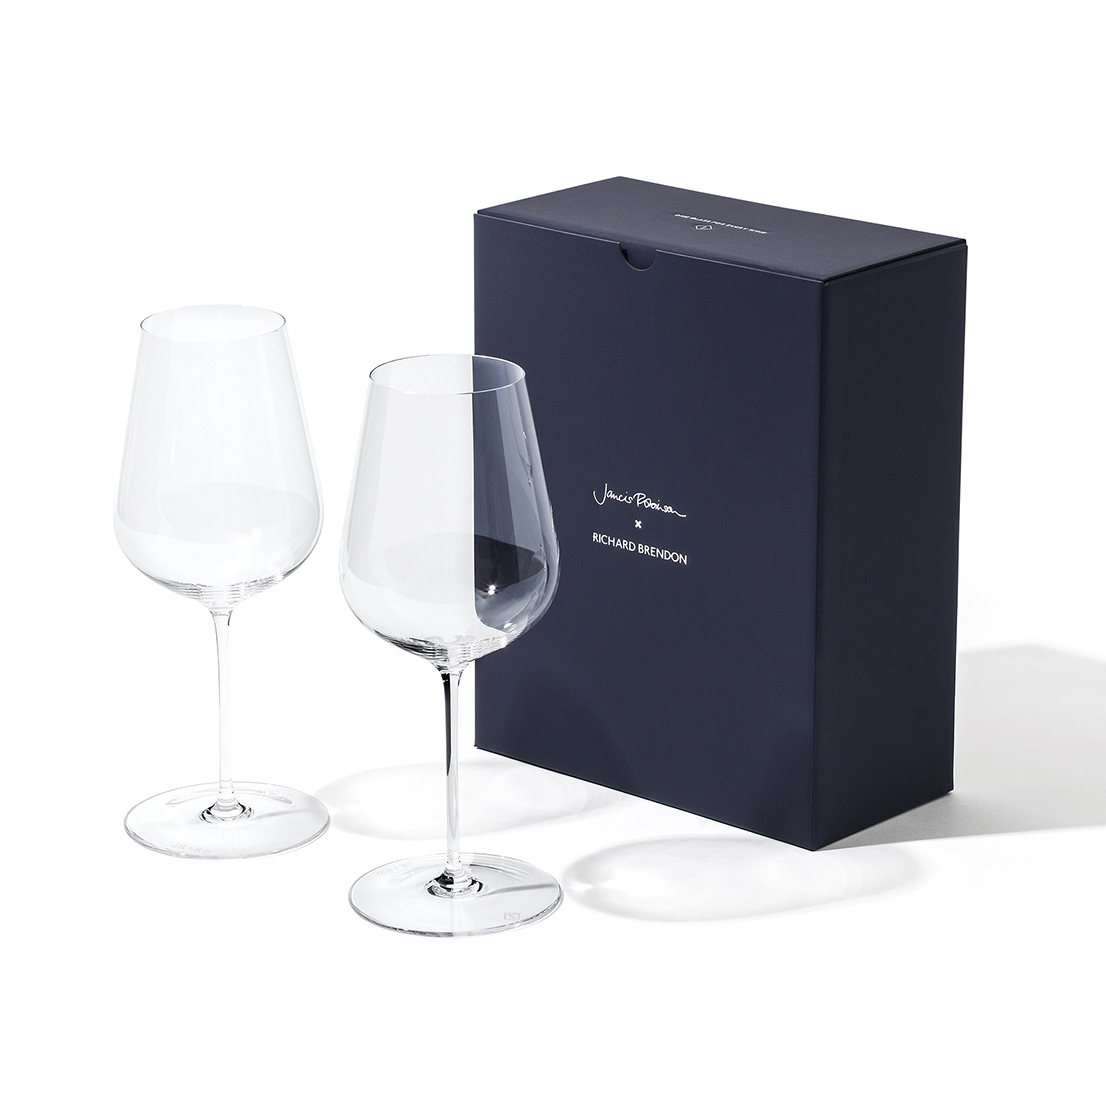 https://www.skurnik.com/wp-content/uploads/2021/09/1.-Jancis-Robinson-Wine-Glass-Pair.jpg